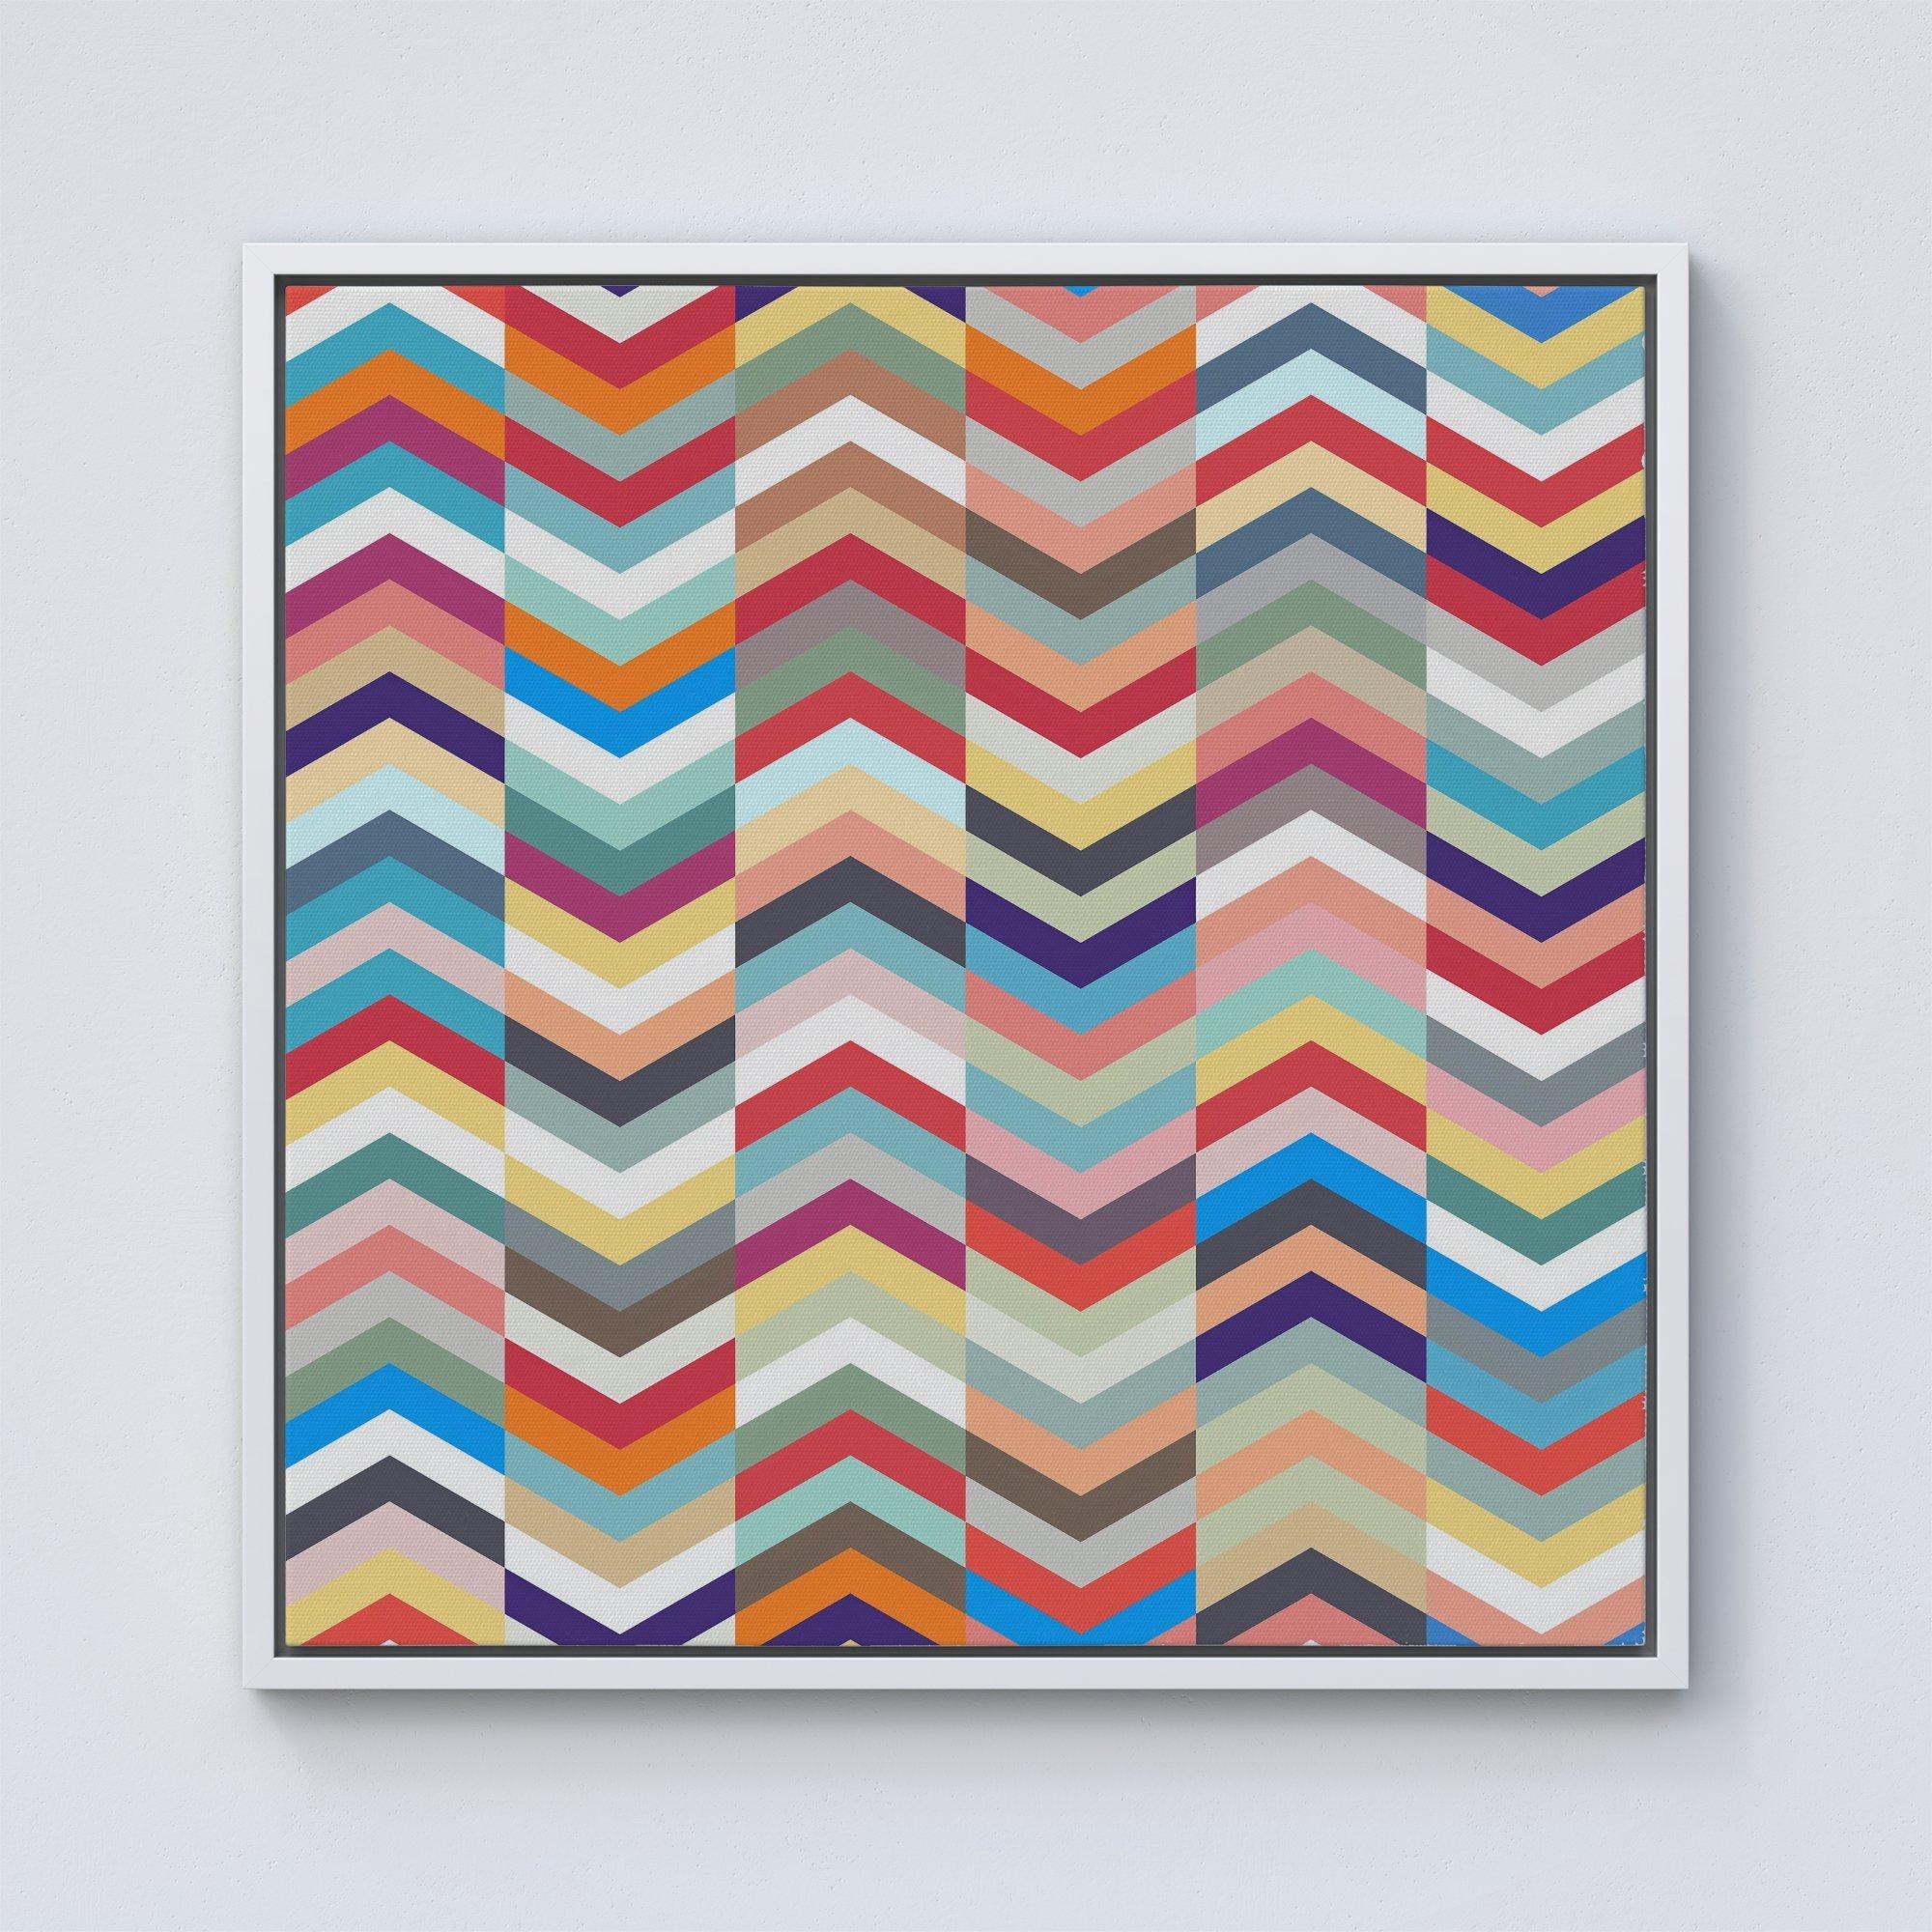 Geometric Multi Colored Chevron Pattern Framed Canvas